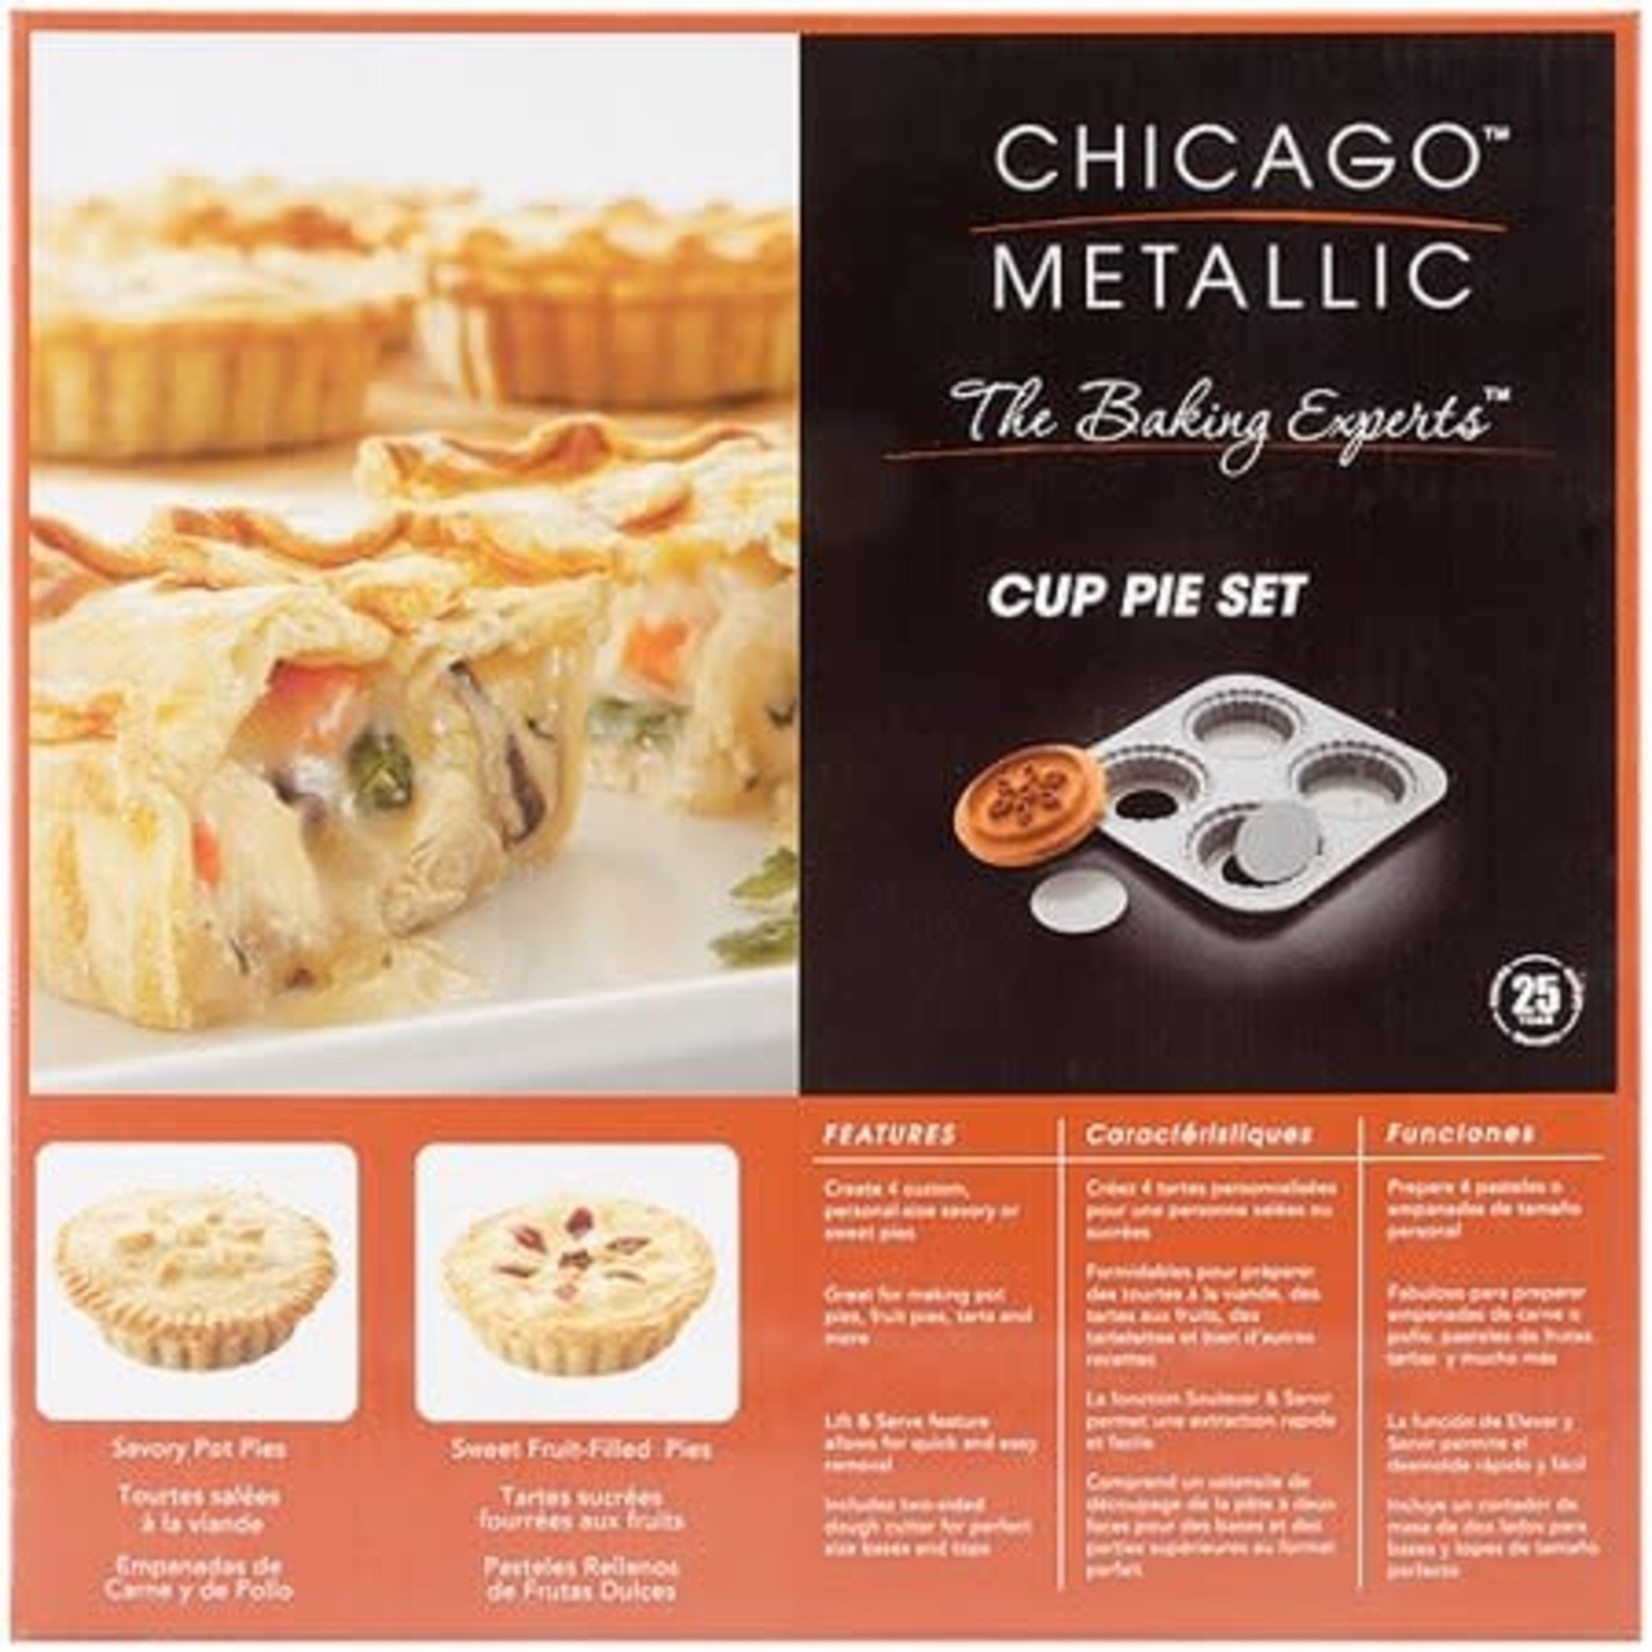 Chicago Metallic Non-Stick Cup Pie Set